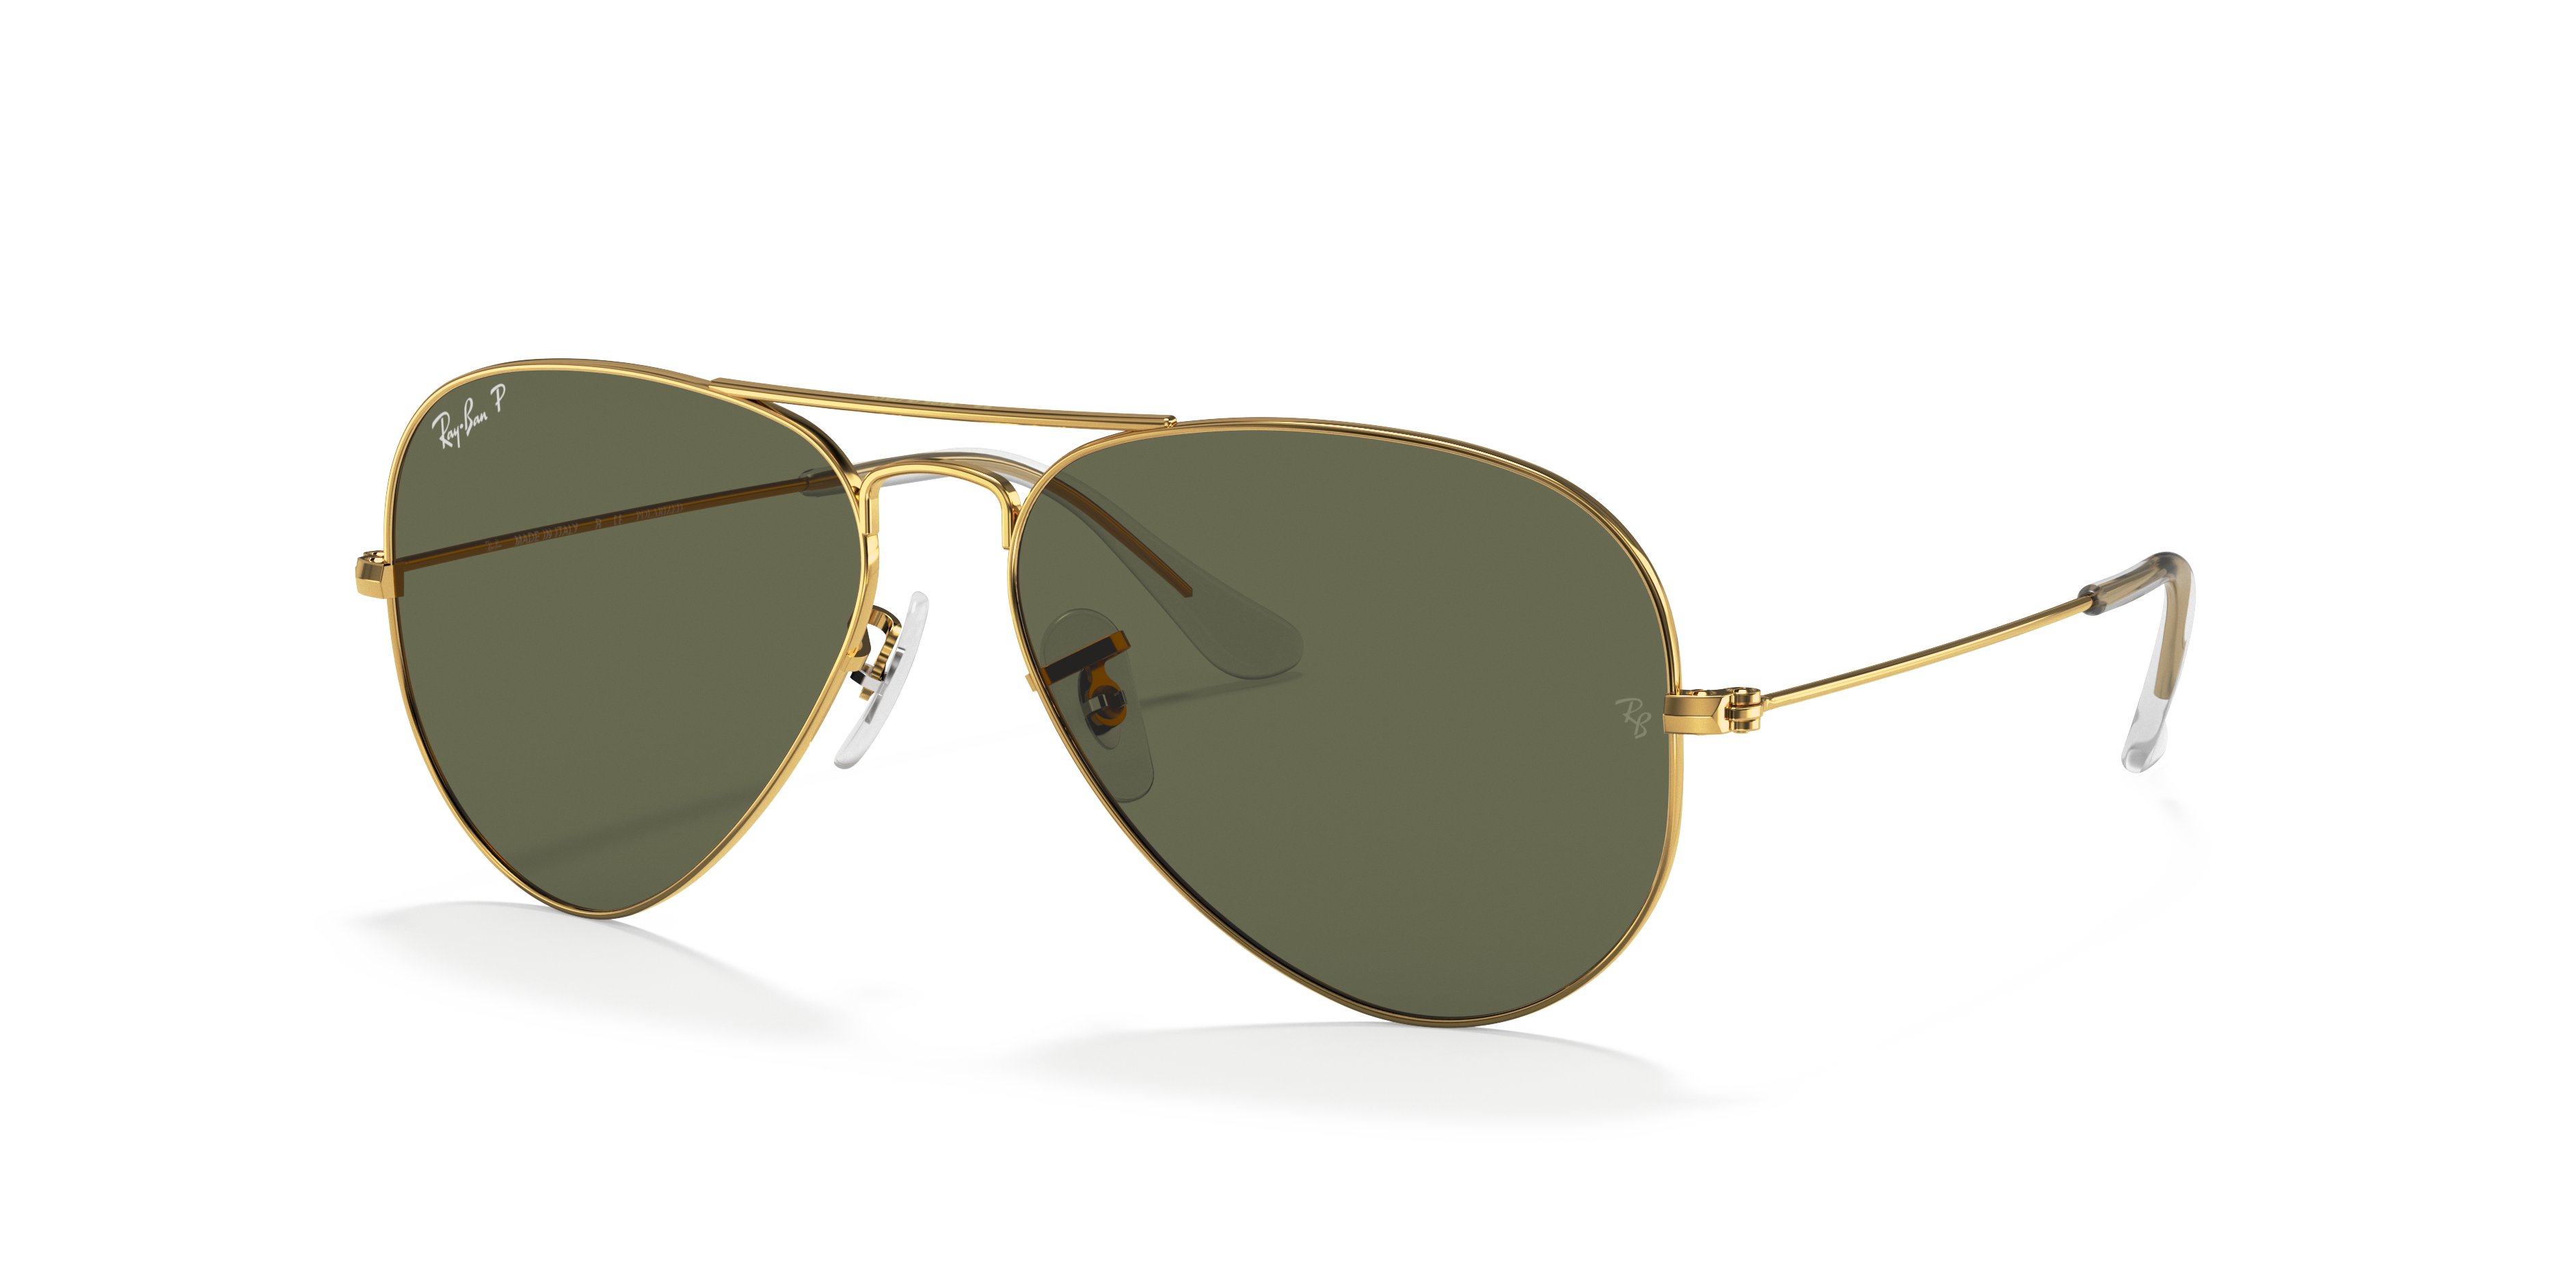 What Face Shape Is Best For Aviator Dark Sunglasses? | ShadyVEU